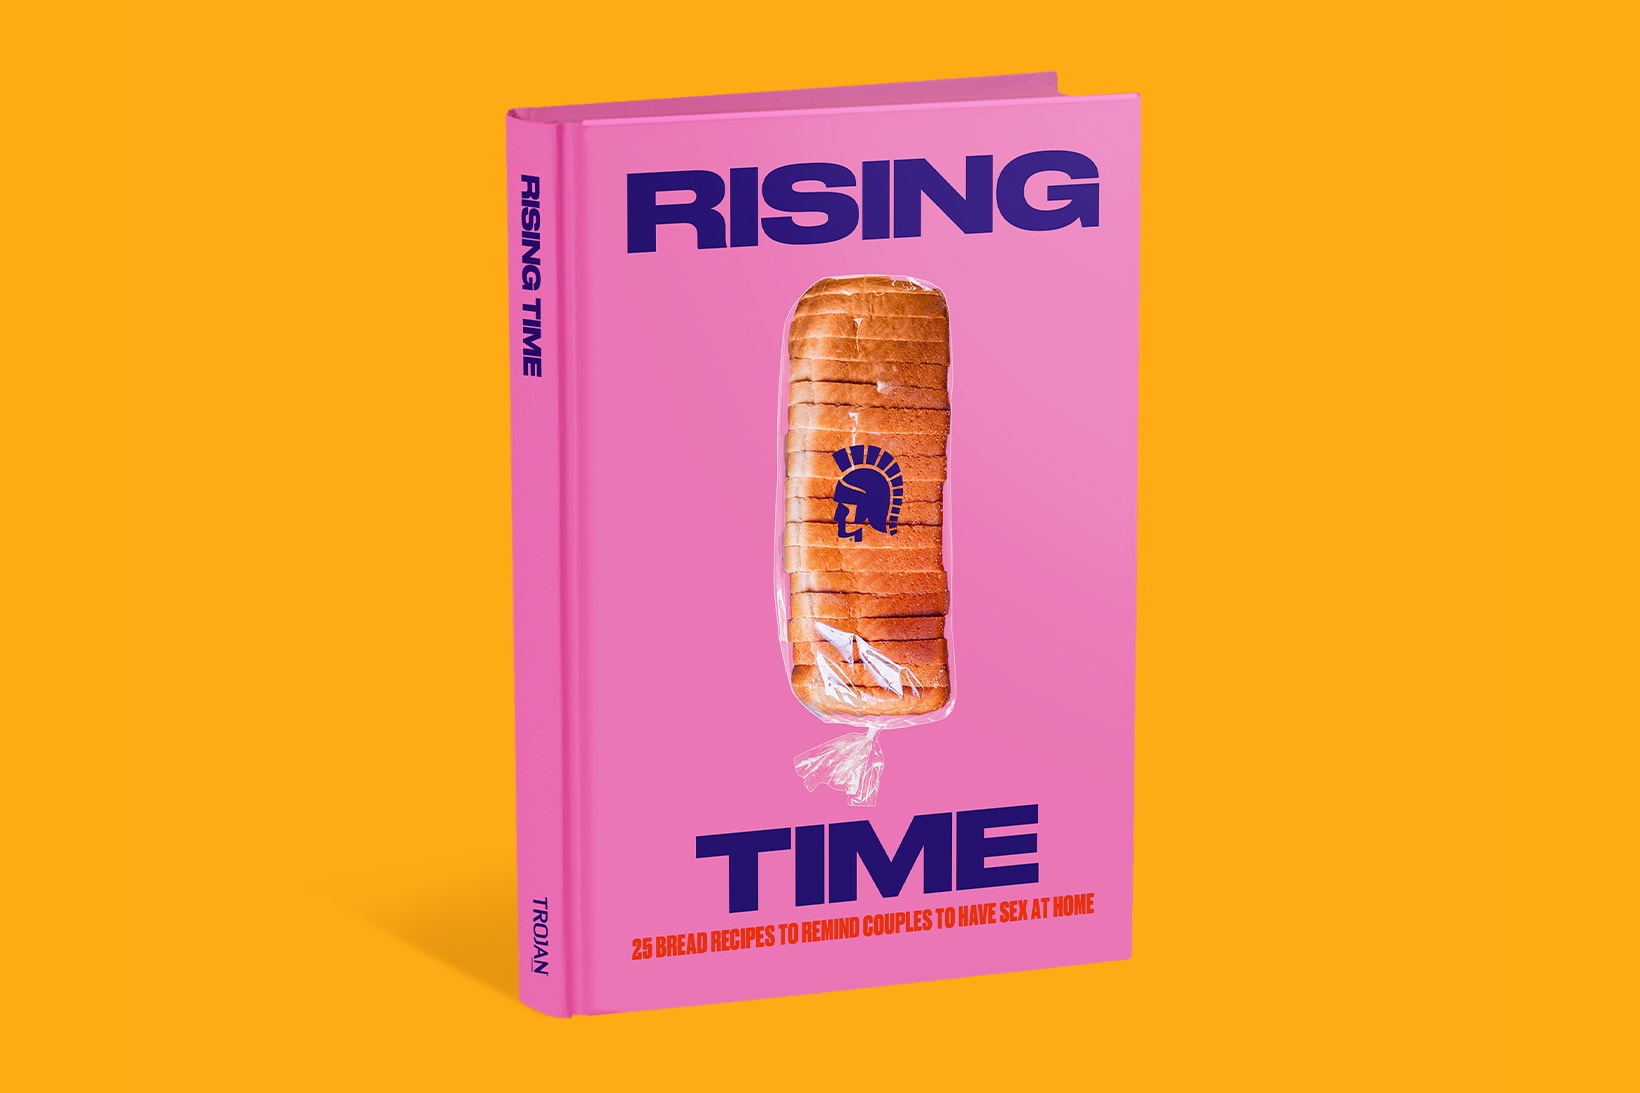 rising time cooking world baking day trojan brand condoms sex quarantine cookbook recipes